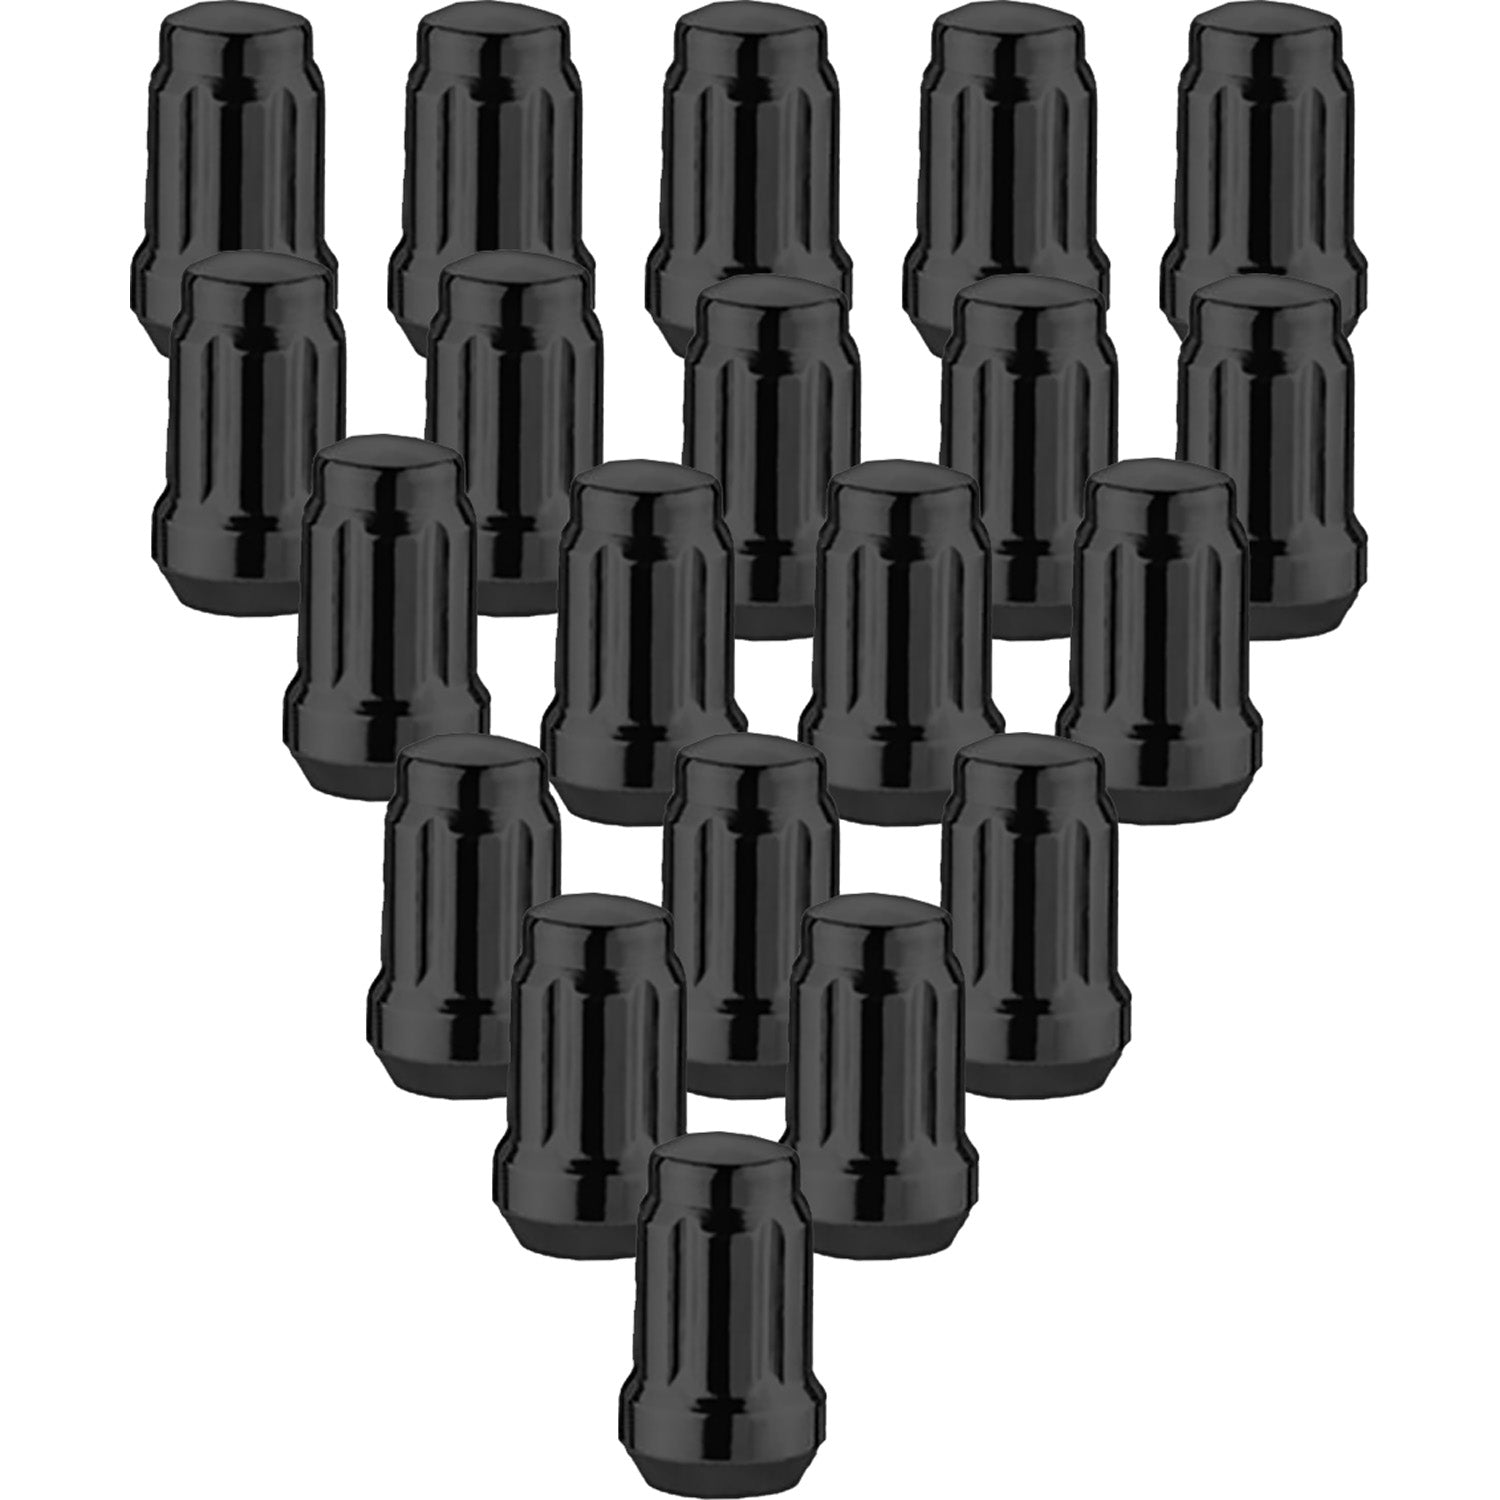 Ascot LN-23 1/2" x 20 6-Spline Lug Nut - Black - Pack of 20